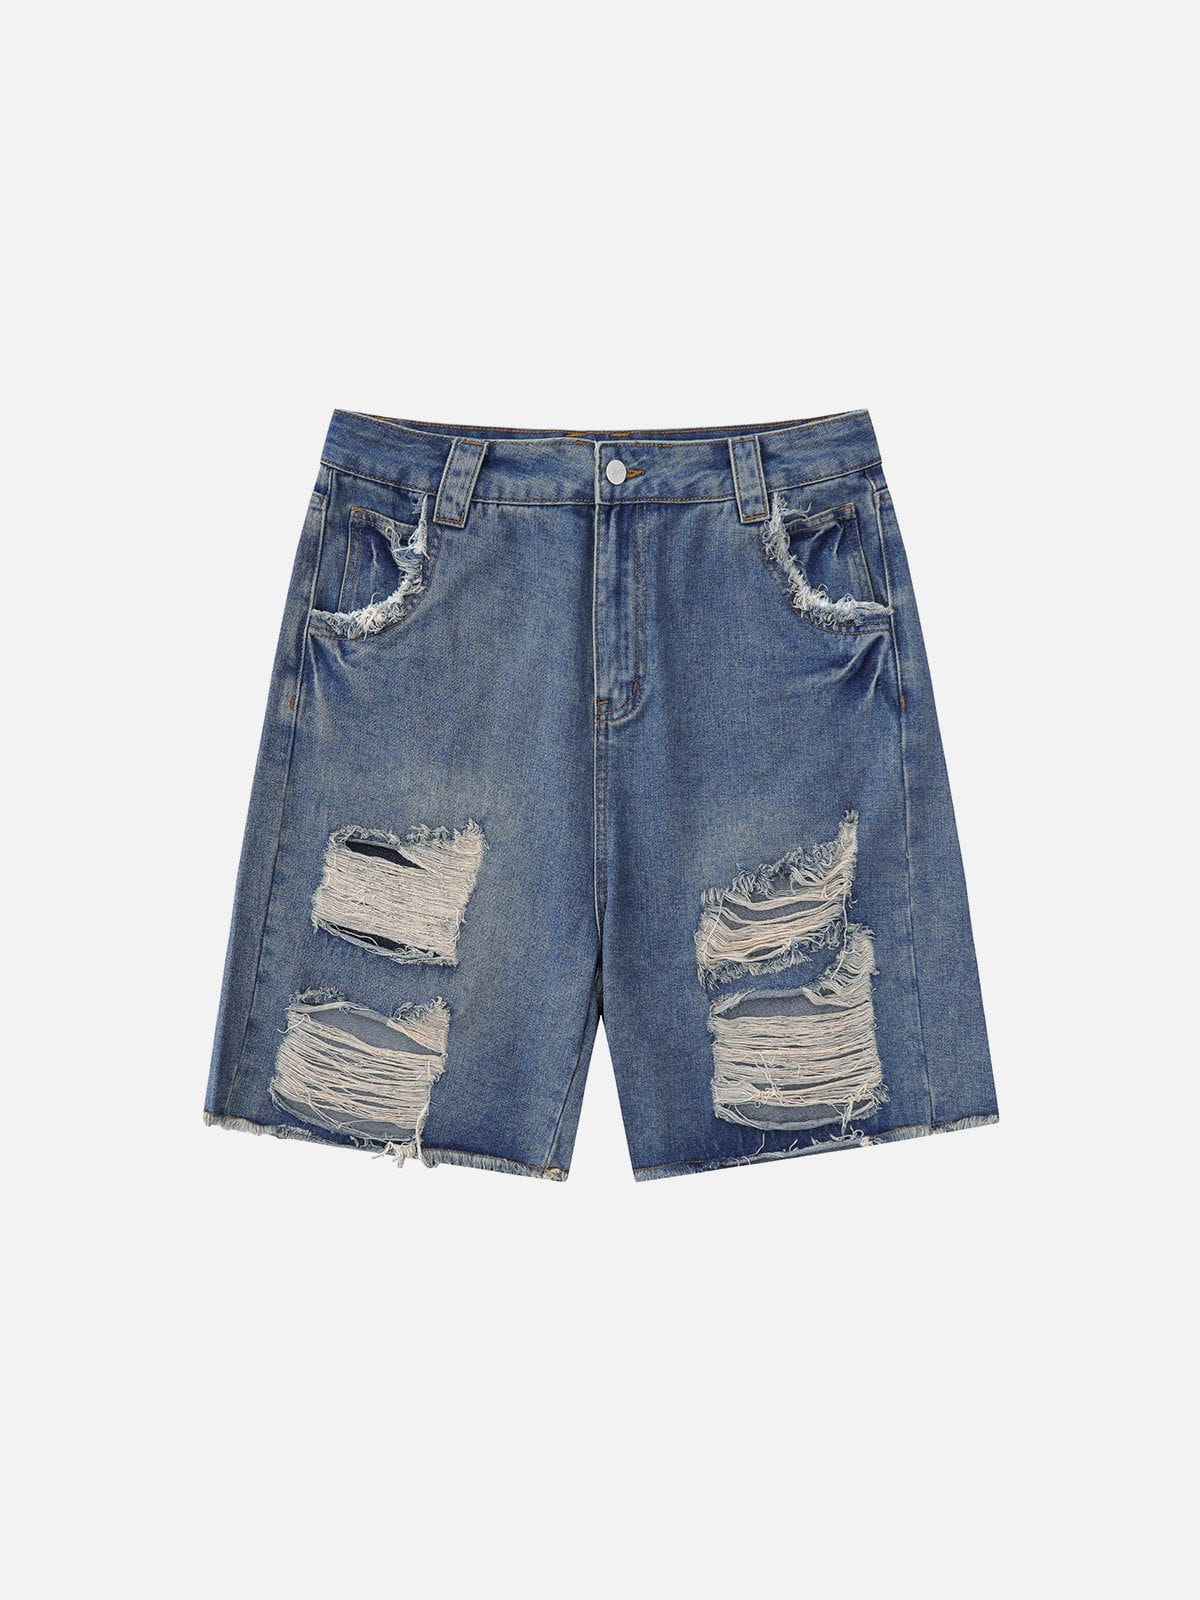 We Love Street  Distressed Vintage Ripped Denim Shorts